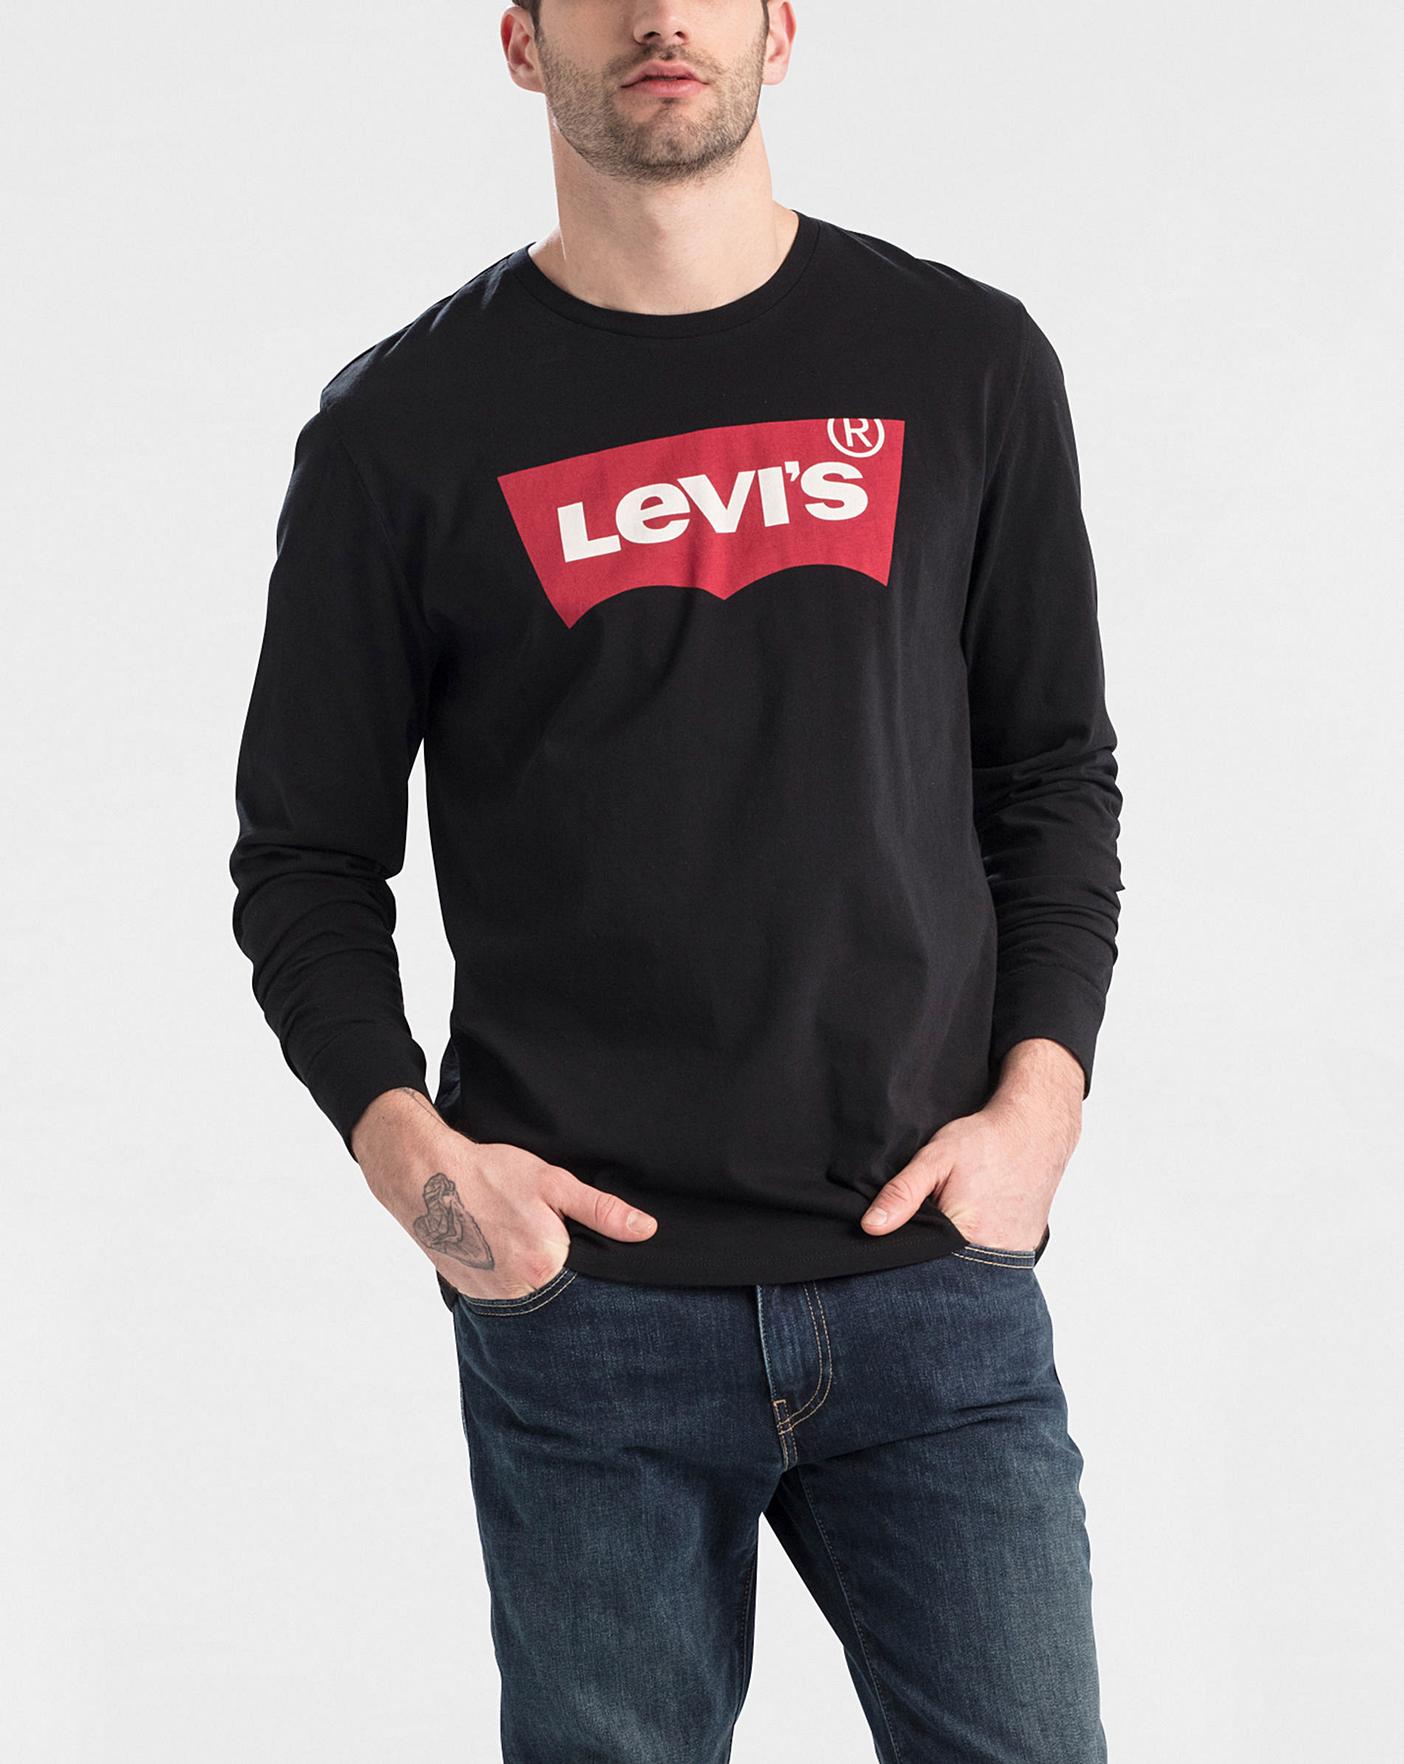 levis long sleeve tshirt